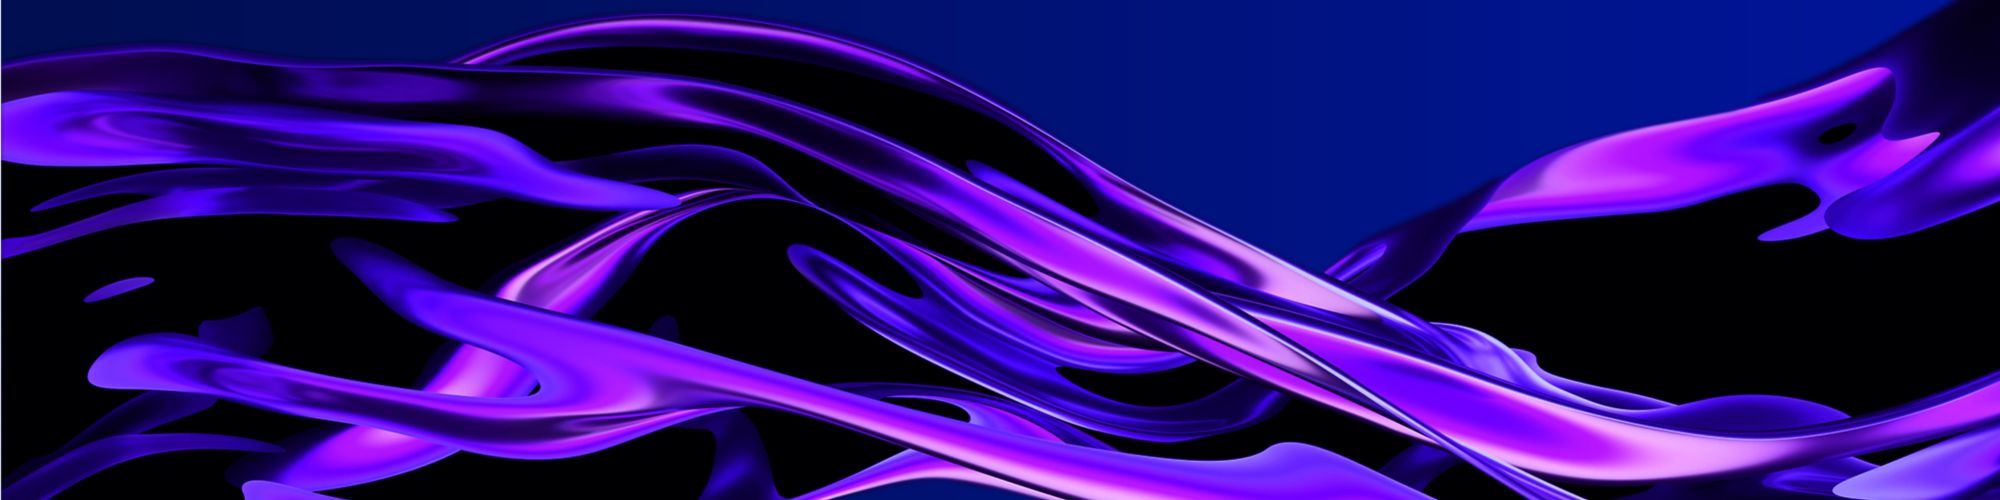 Purple horizontal vortex